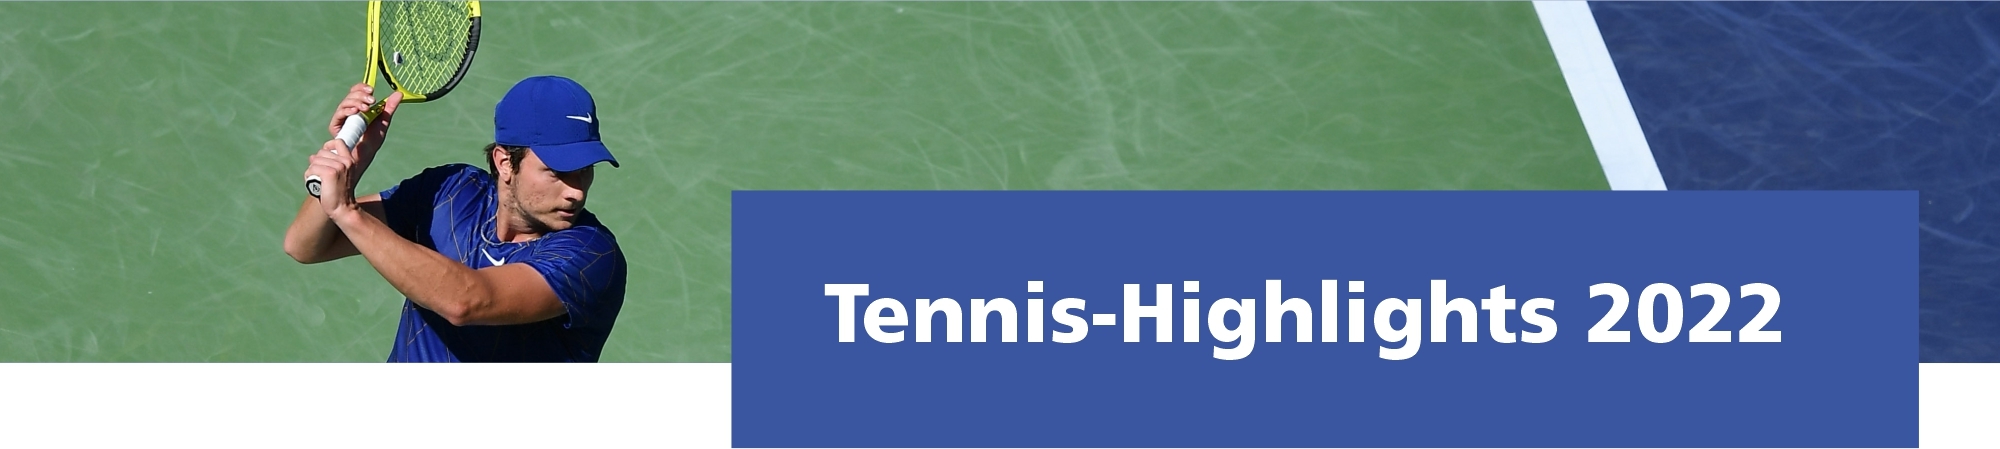 Tennis Highlights 2022